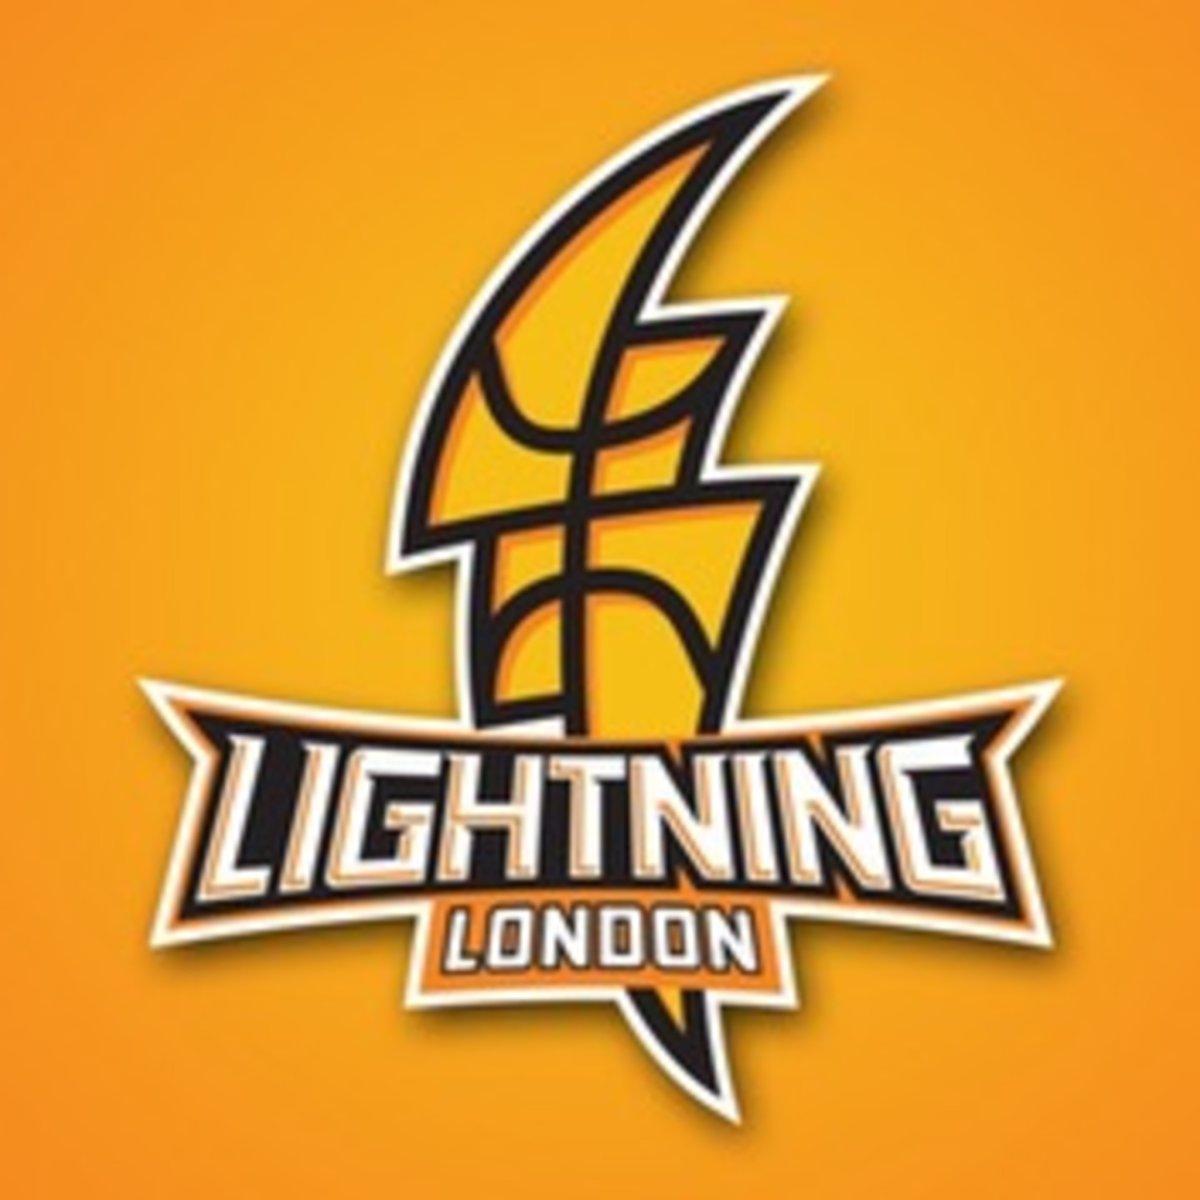 London Lightning pick up Atlantic split with loss in Moncton on Thursday - image